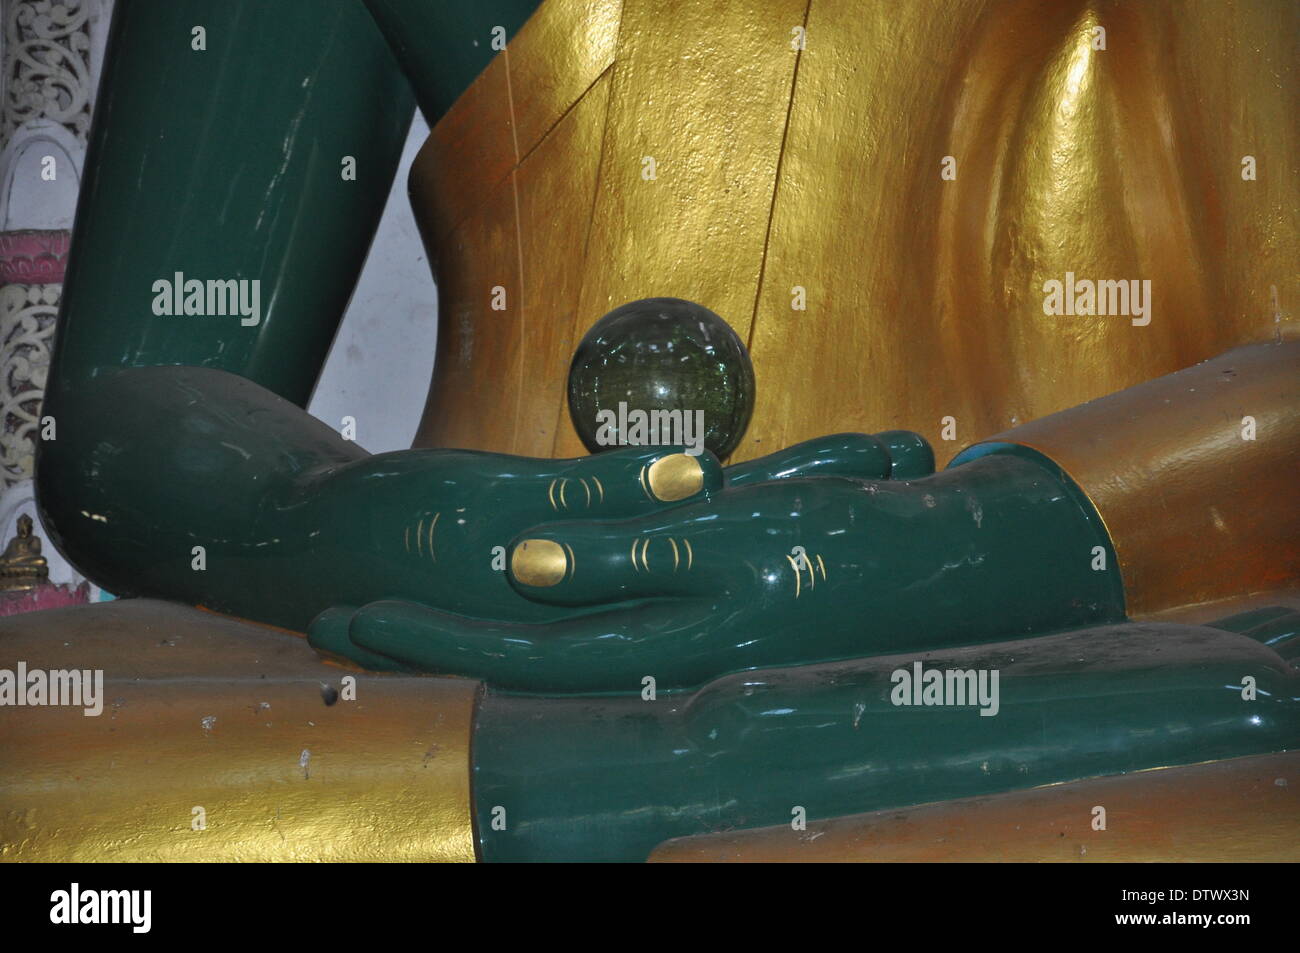 Gruener buddha hi-res stock photography and images - Alamy